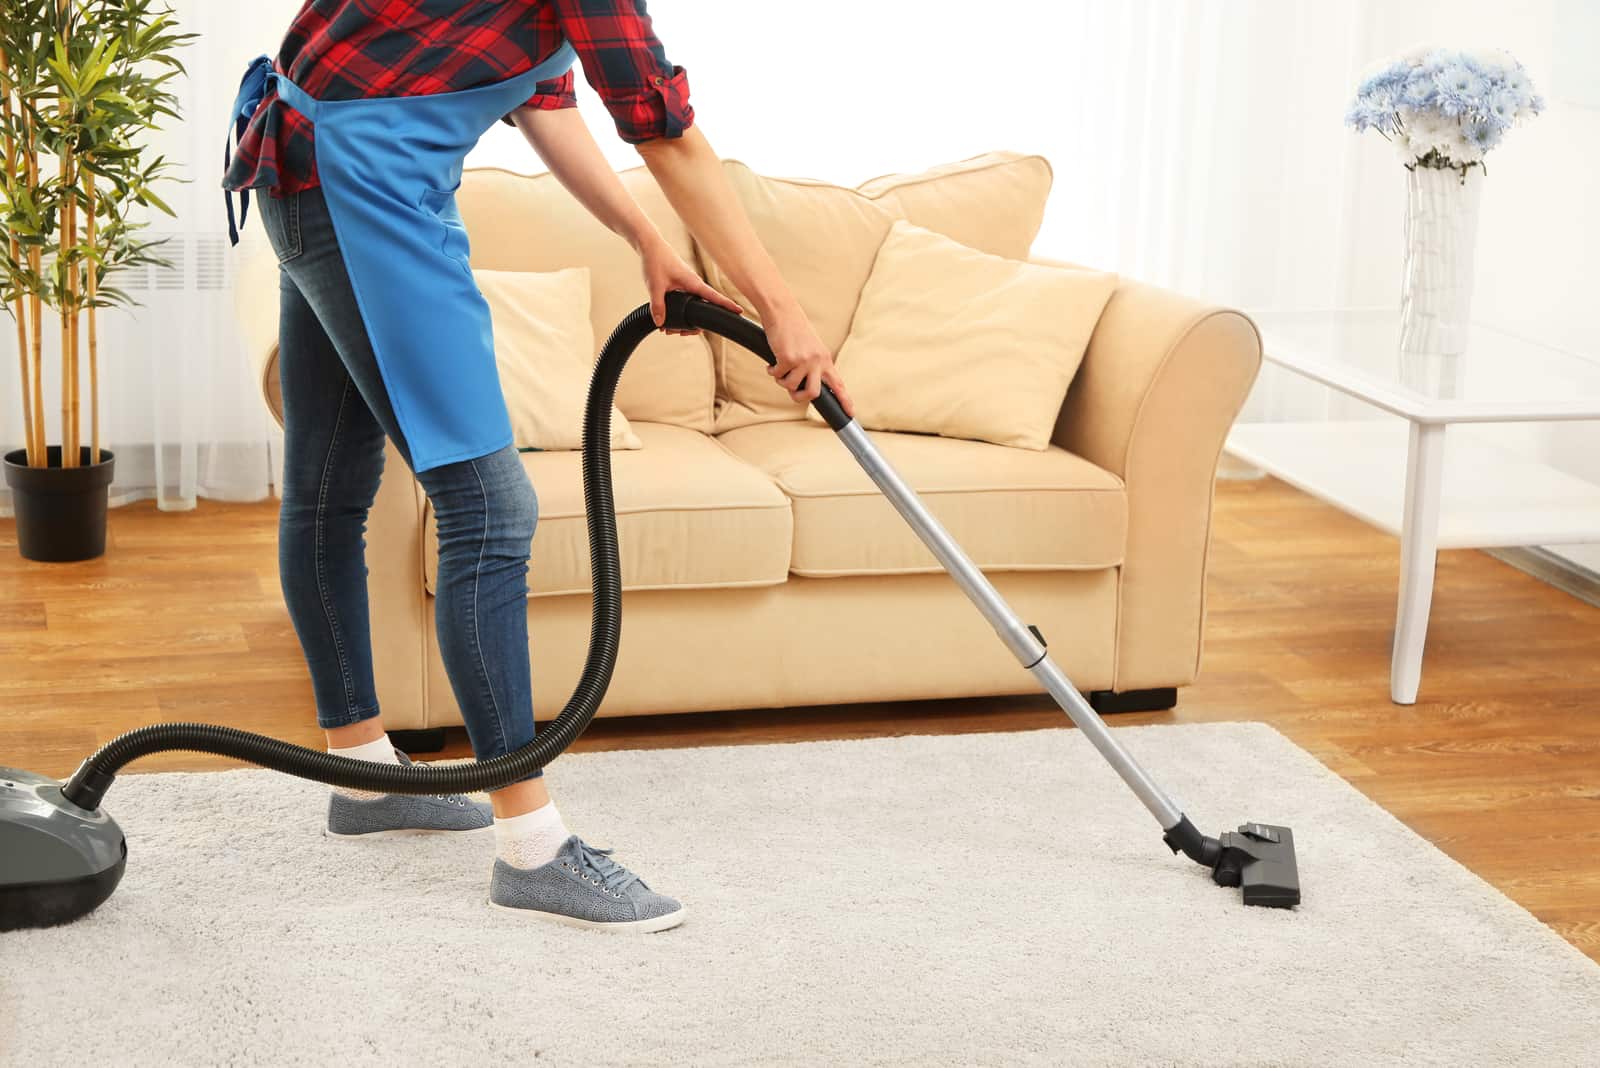 a woman vacuuming a house